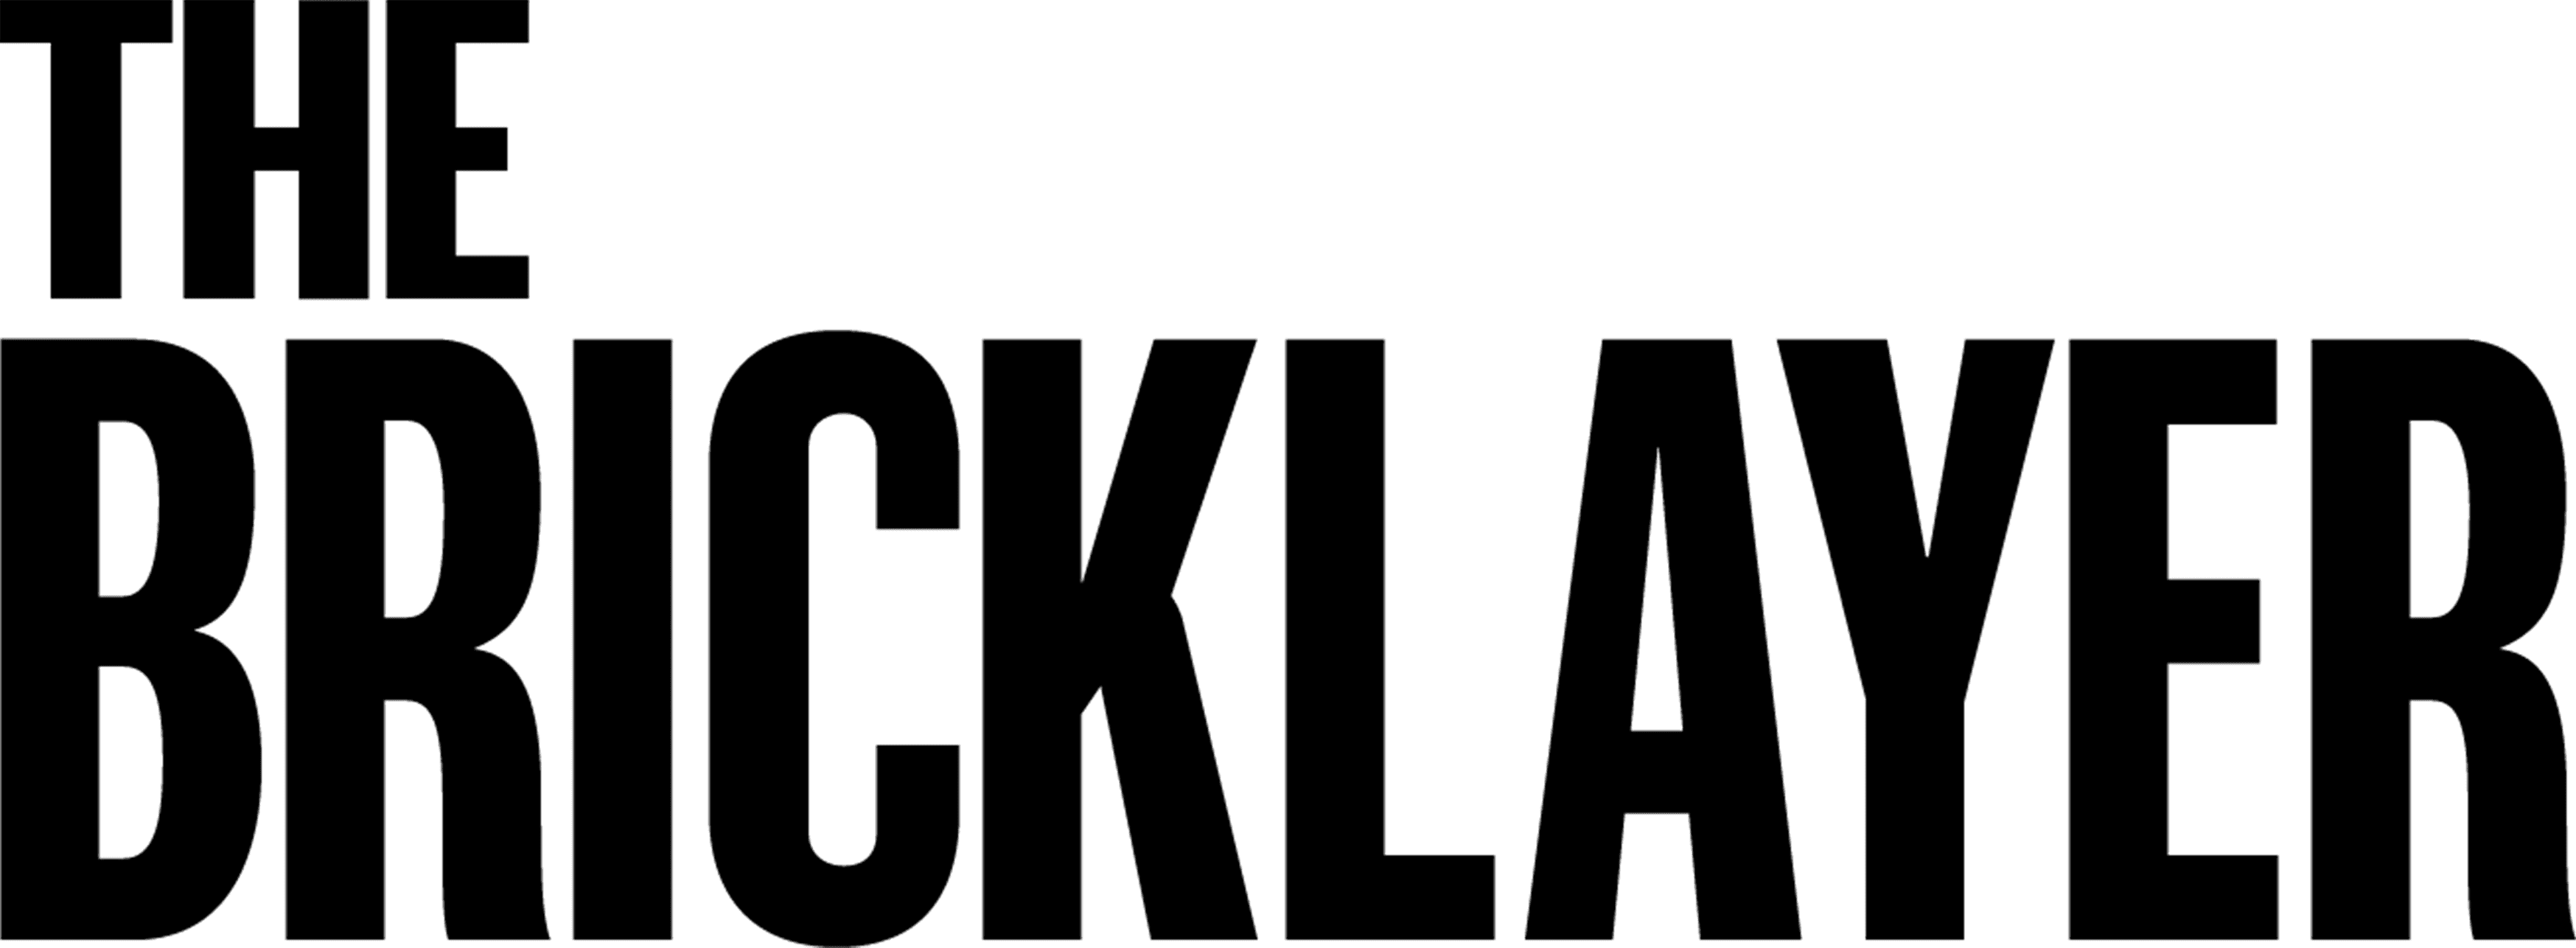 The Bricklayer logo